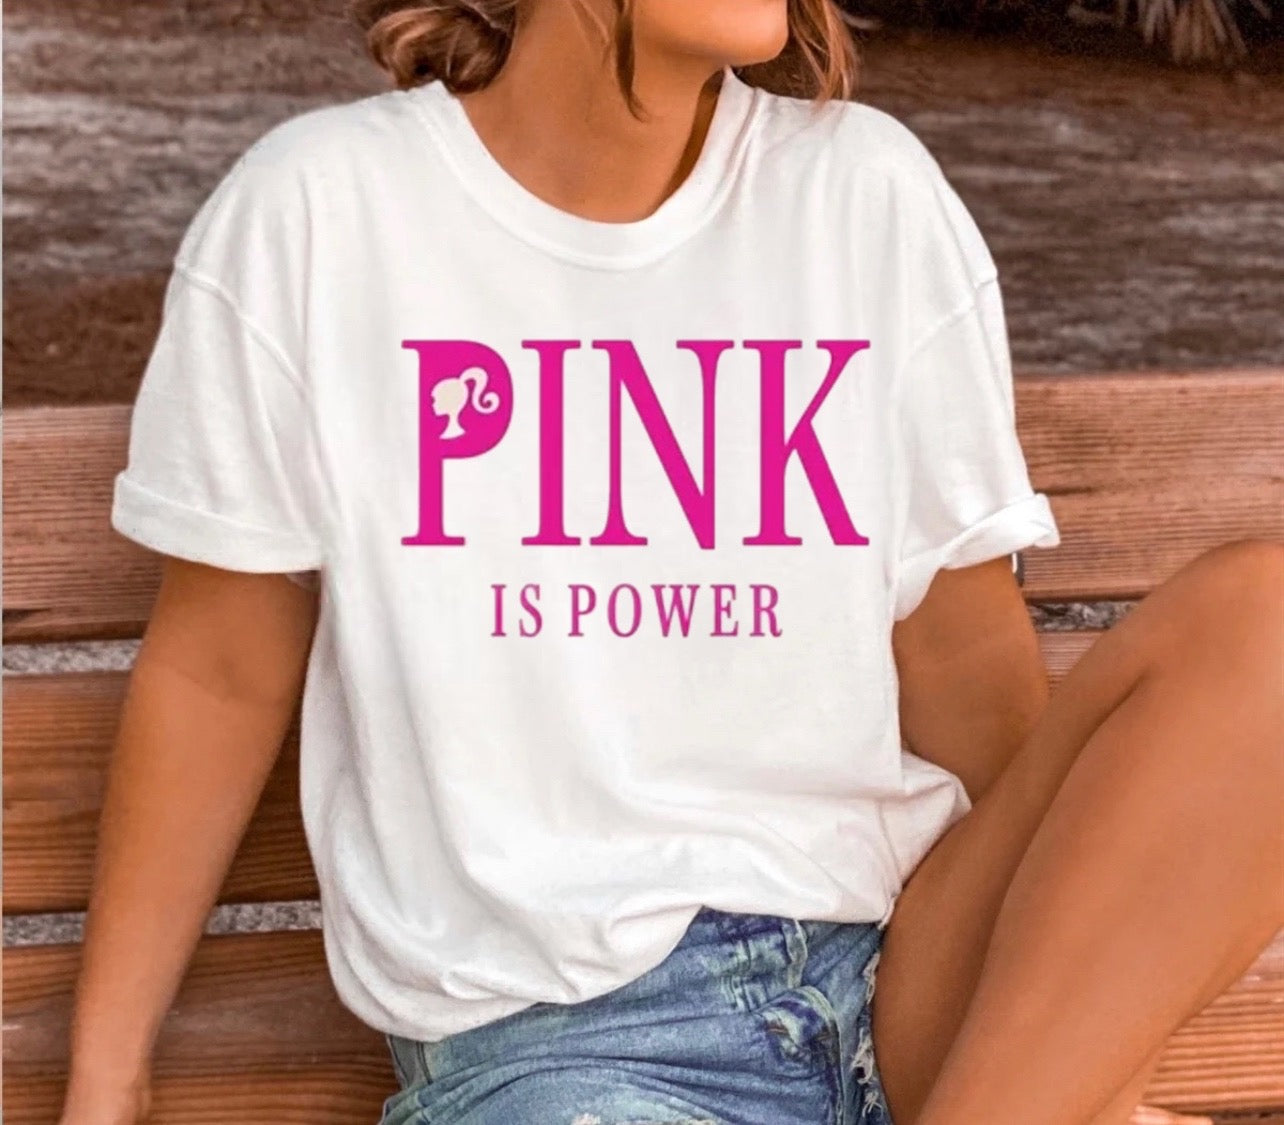 Pink is powerful shirt| Pink power Barbie shirt| Gift for barbie fan| Barbie tee| Barbie Girl shirt